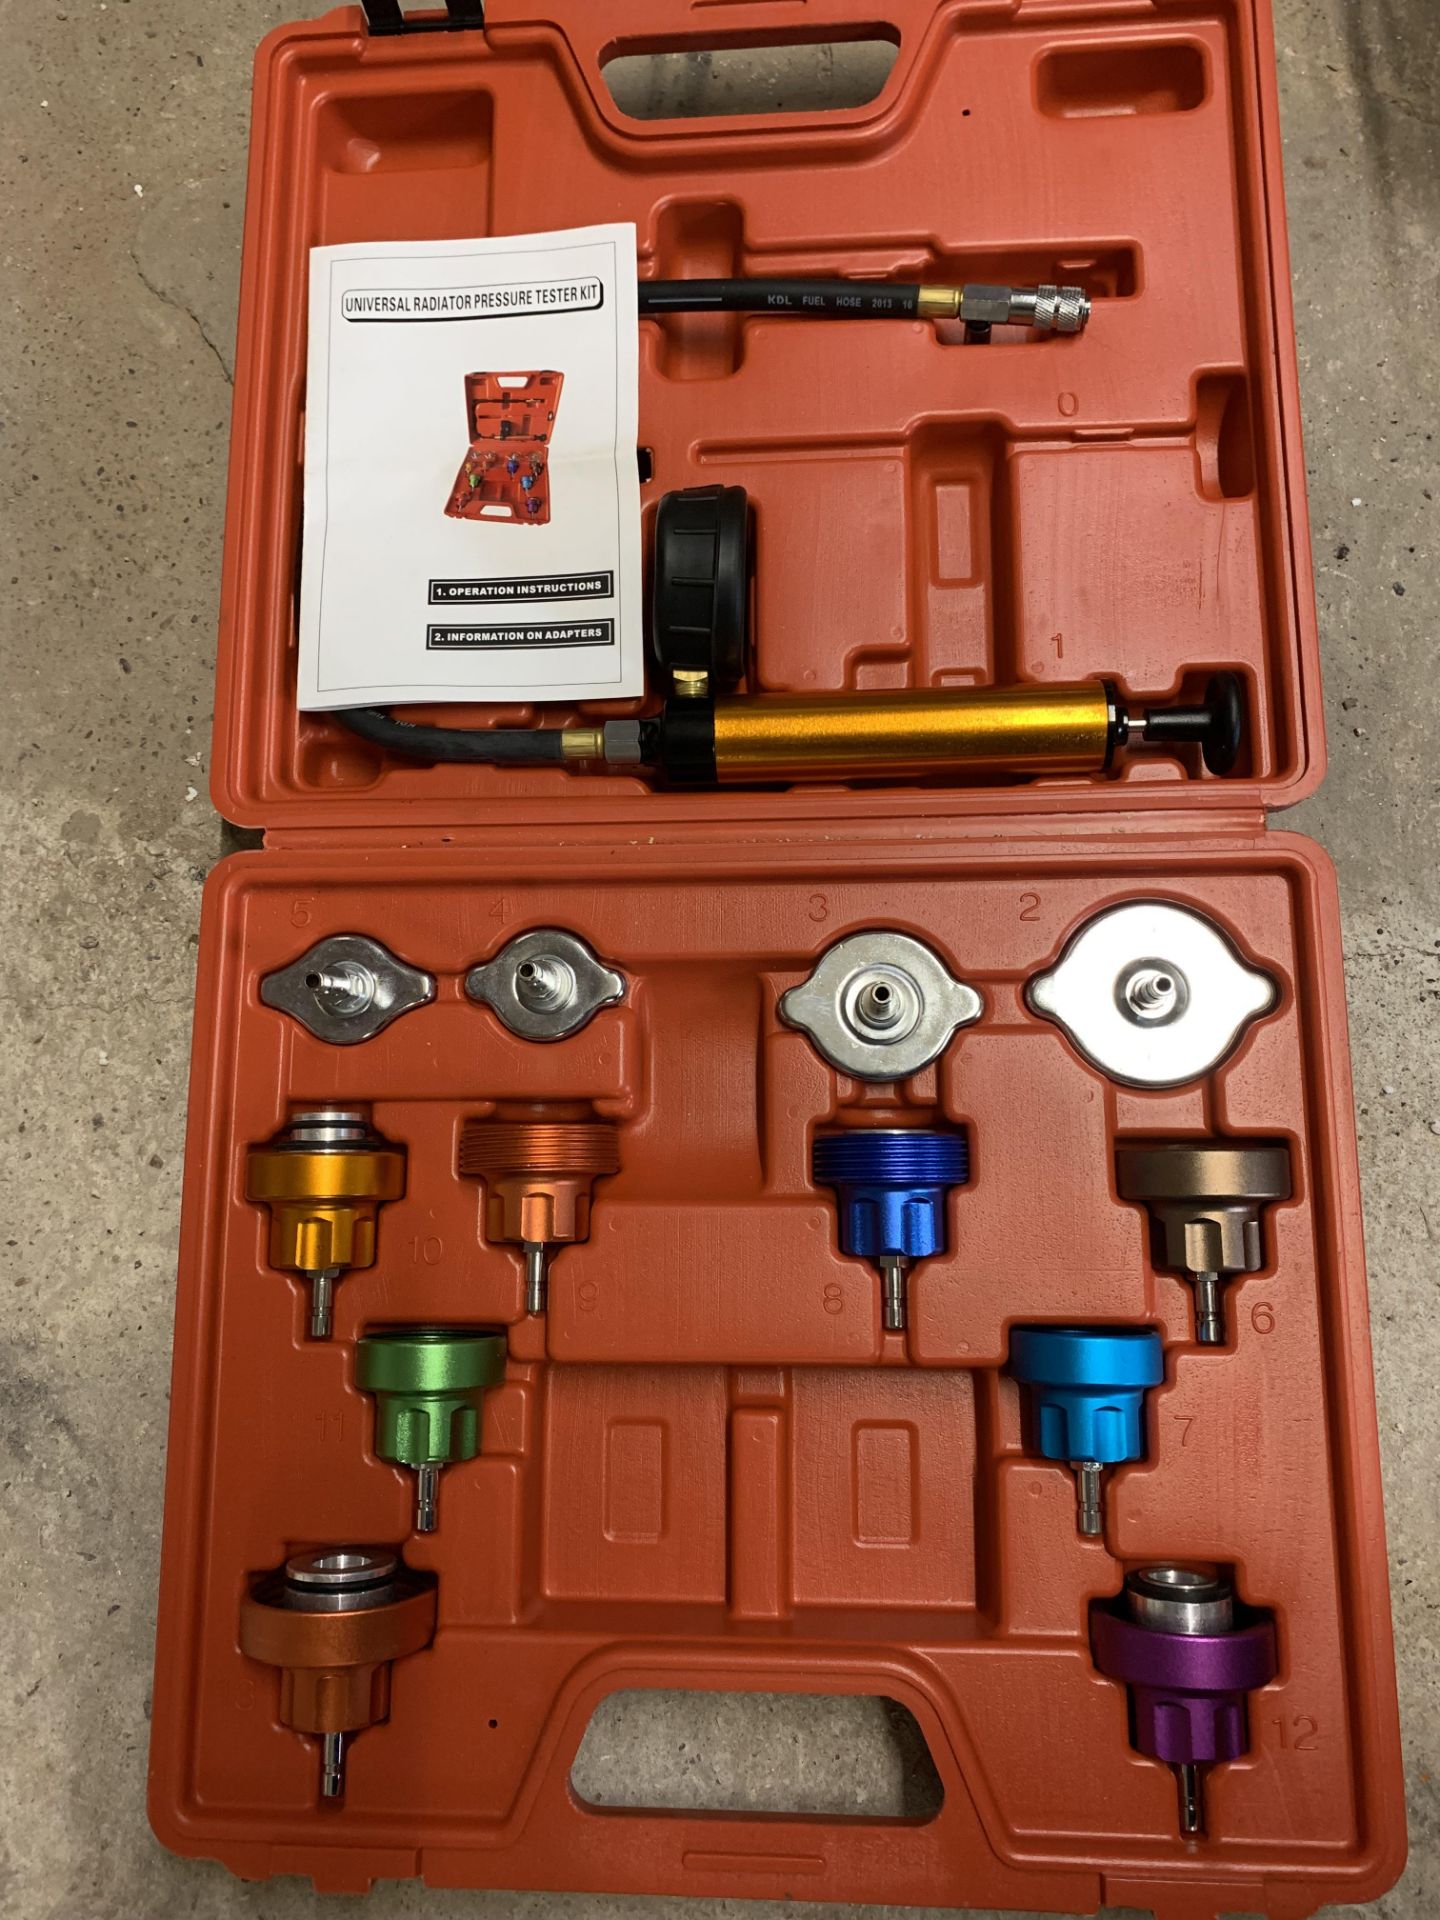 Cased universal pressure radiator testing kit